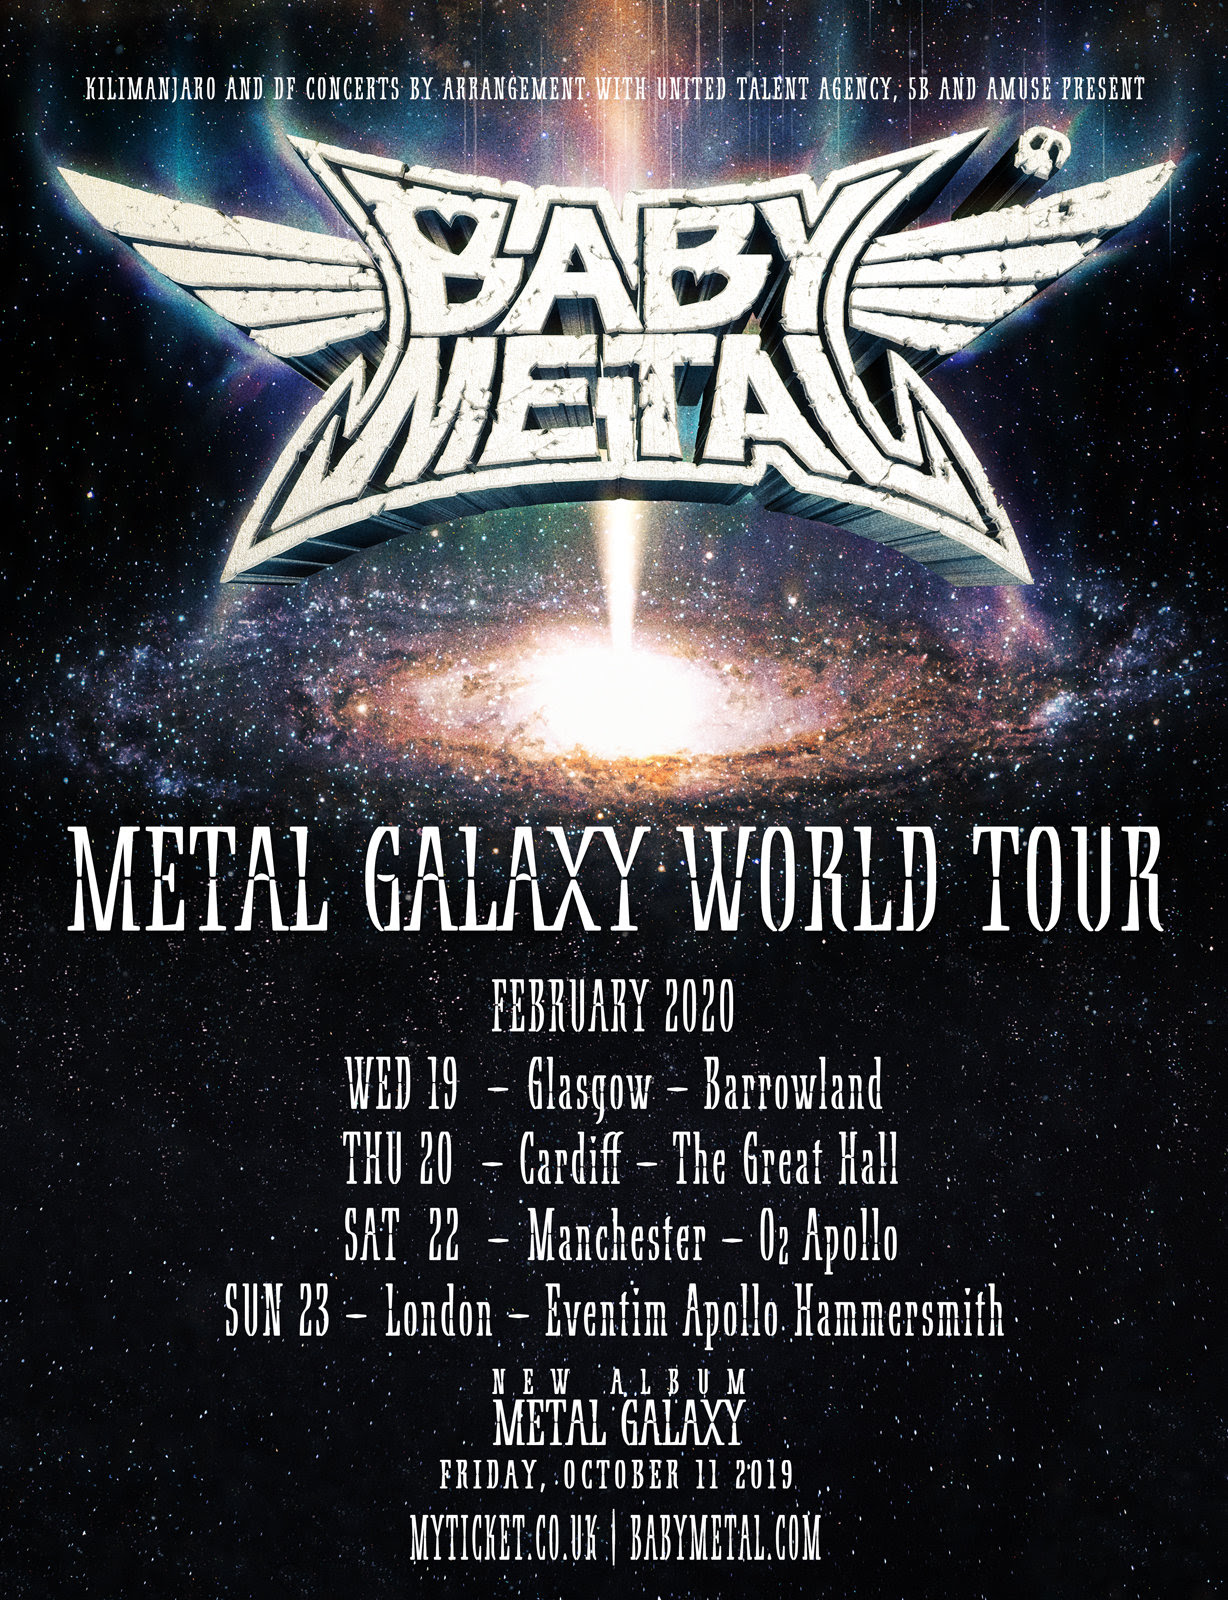 Babymetal tour dates